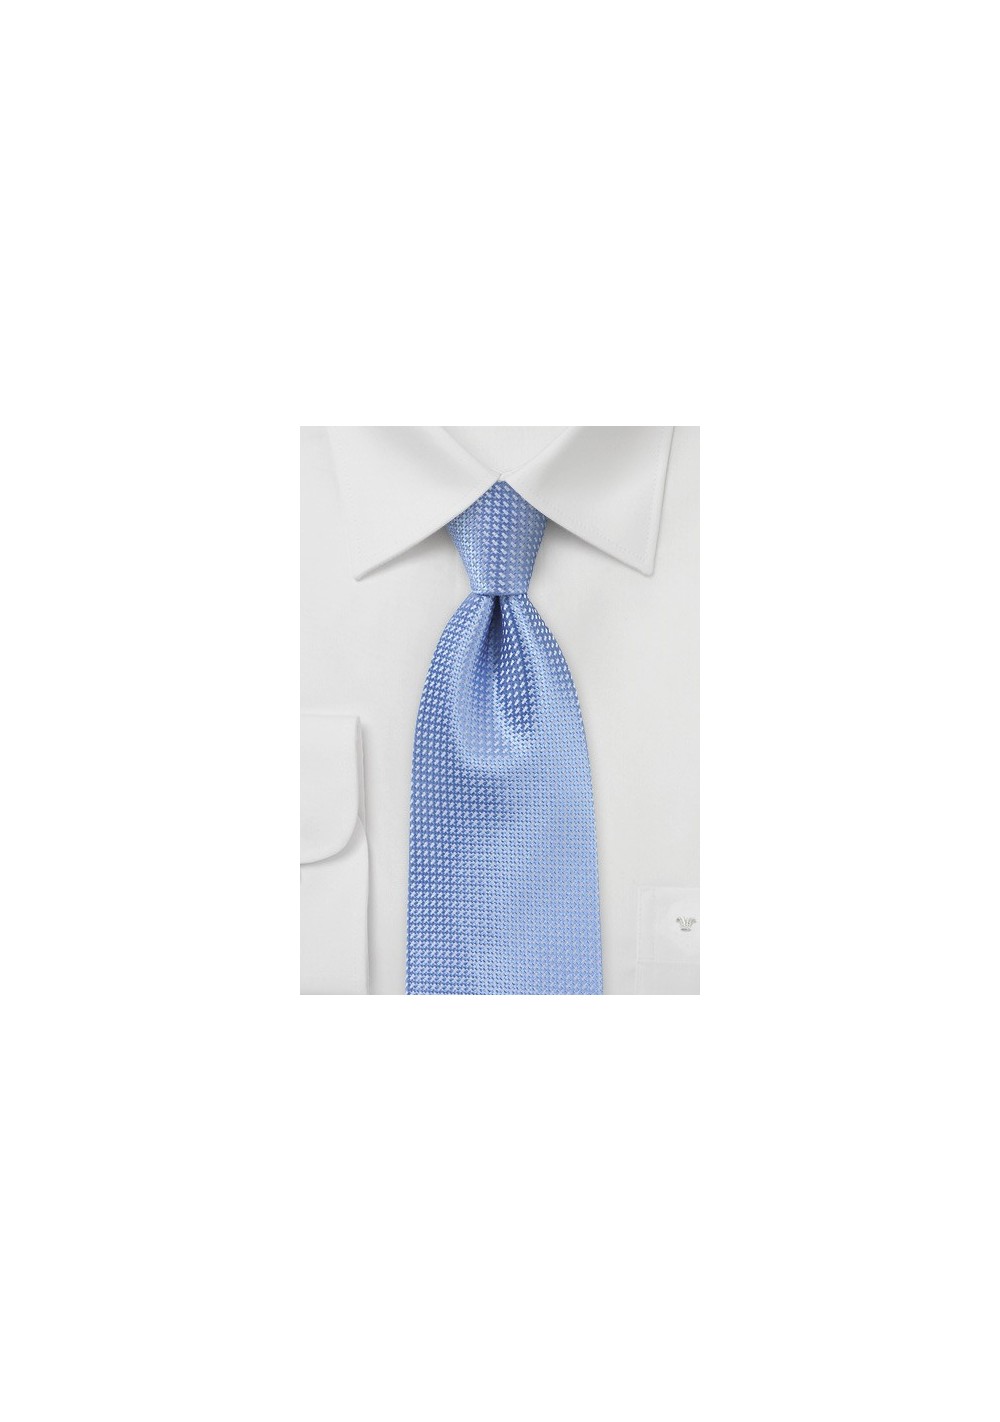 Blue Extra Long Ties - Sky blue XL necktie